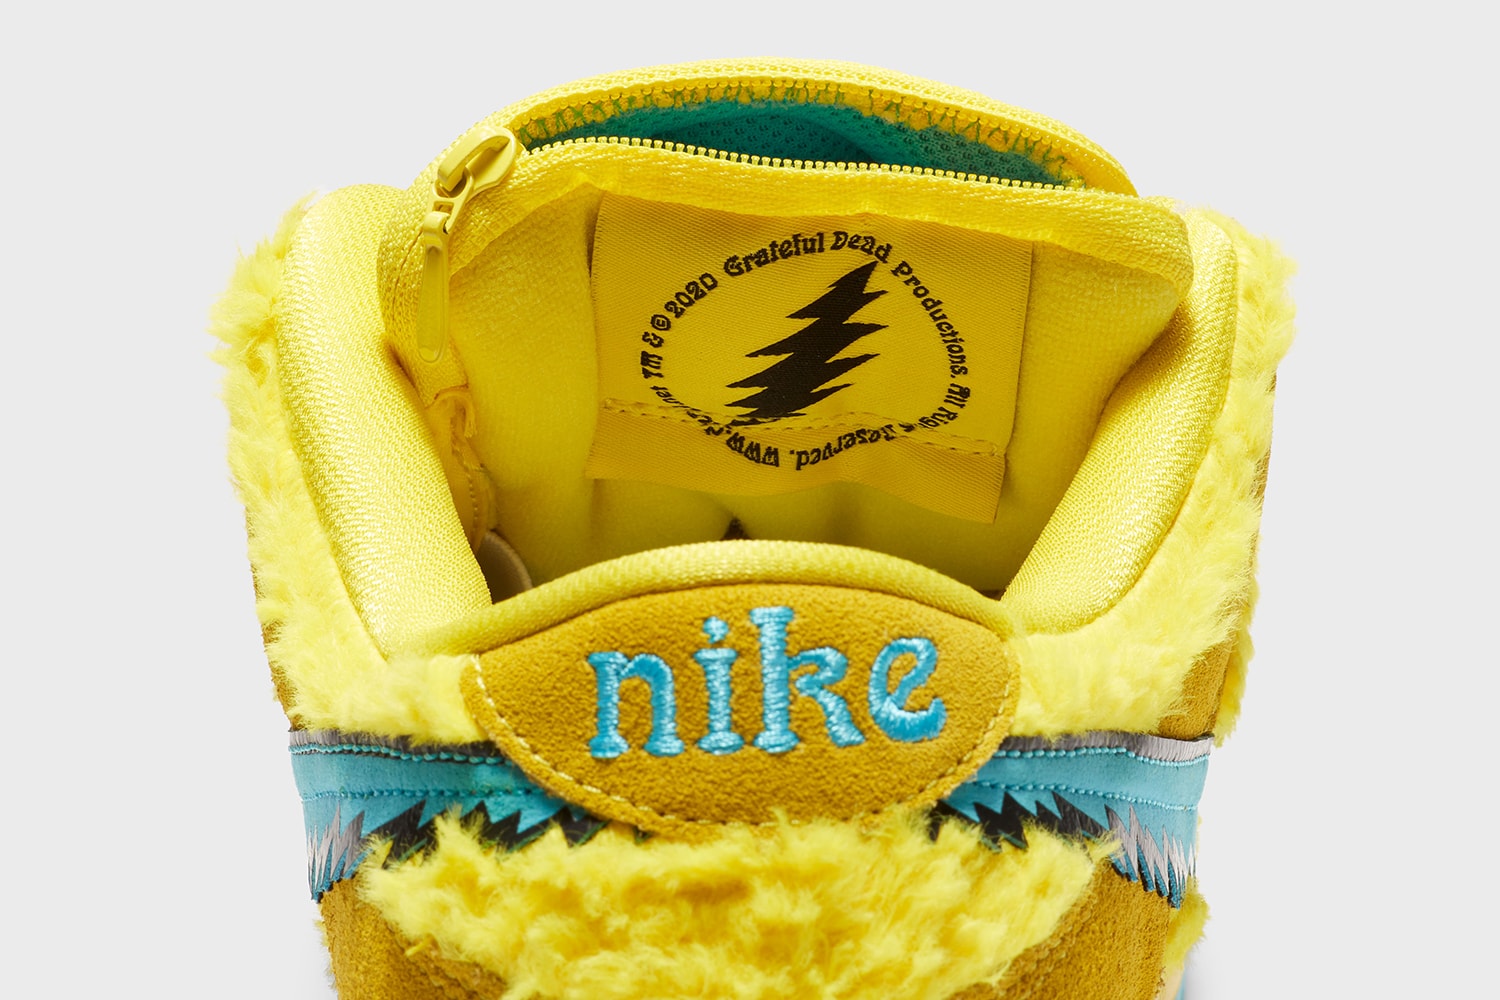 Nike SB Dunk Low Grateful Dead Official Release Info Green Yellow Bear cj5378-700 cj5378-300 cj5378-800 Opti Yellow Blue Fury Green Spark Soar